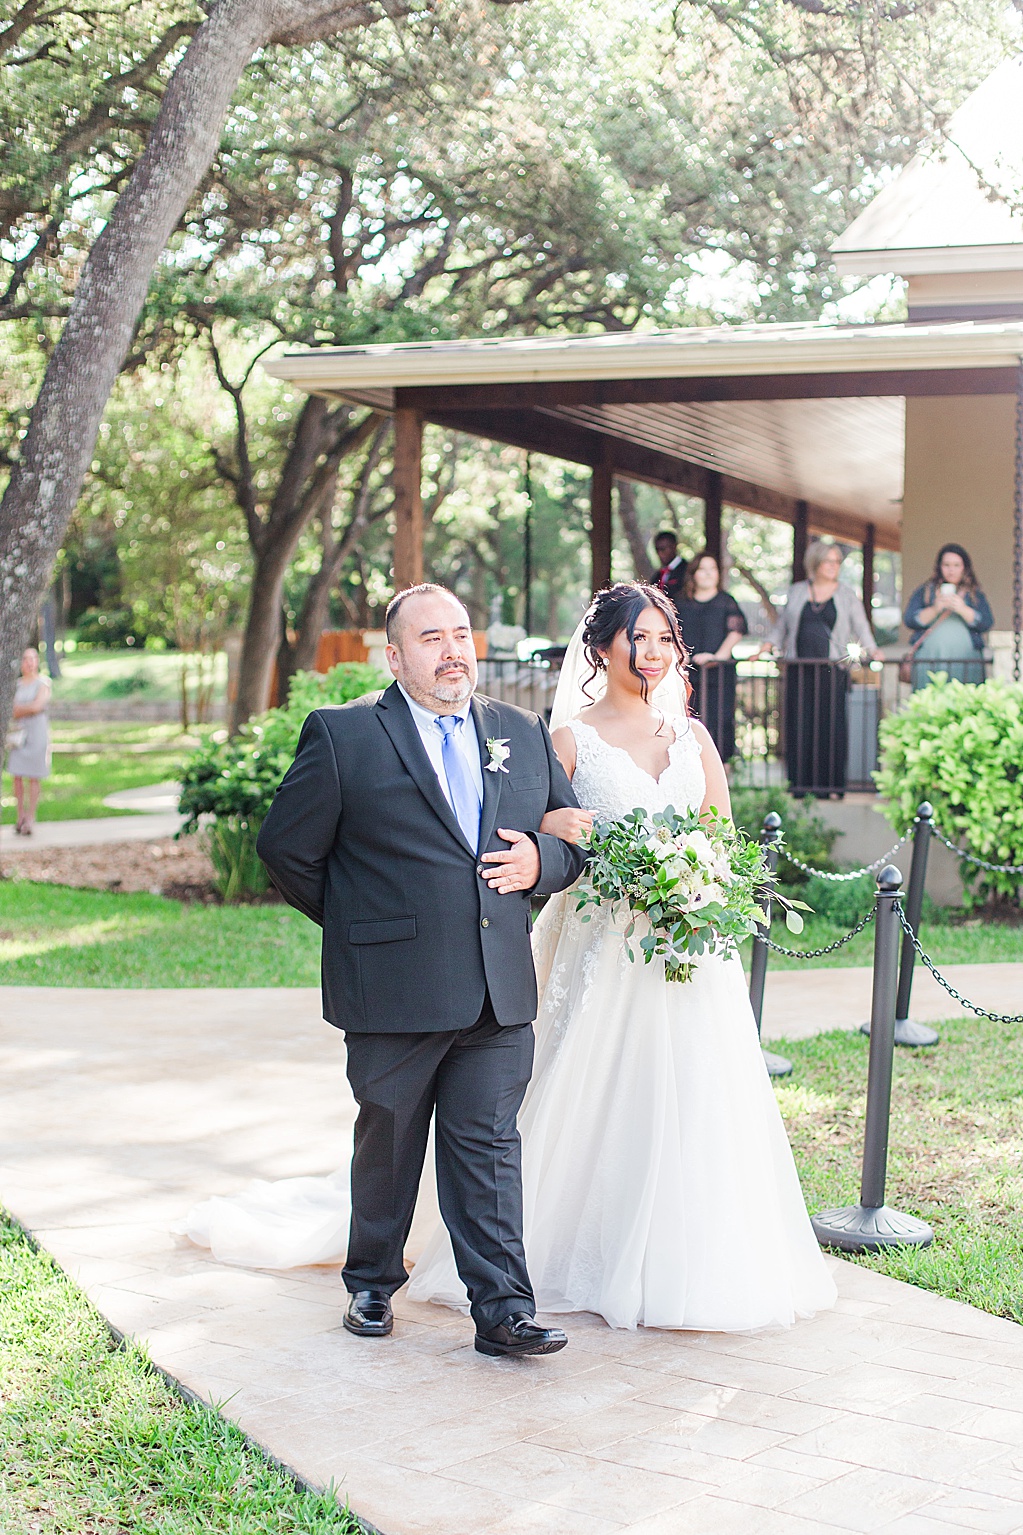 Spring Wedding at The Club at Garden Ridge in San Antonio Texas Featuring romantic greenery 0062